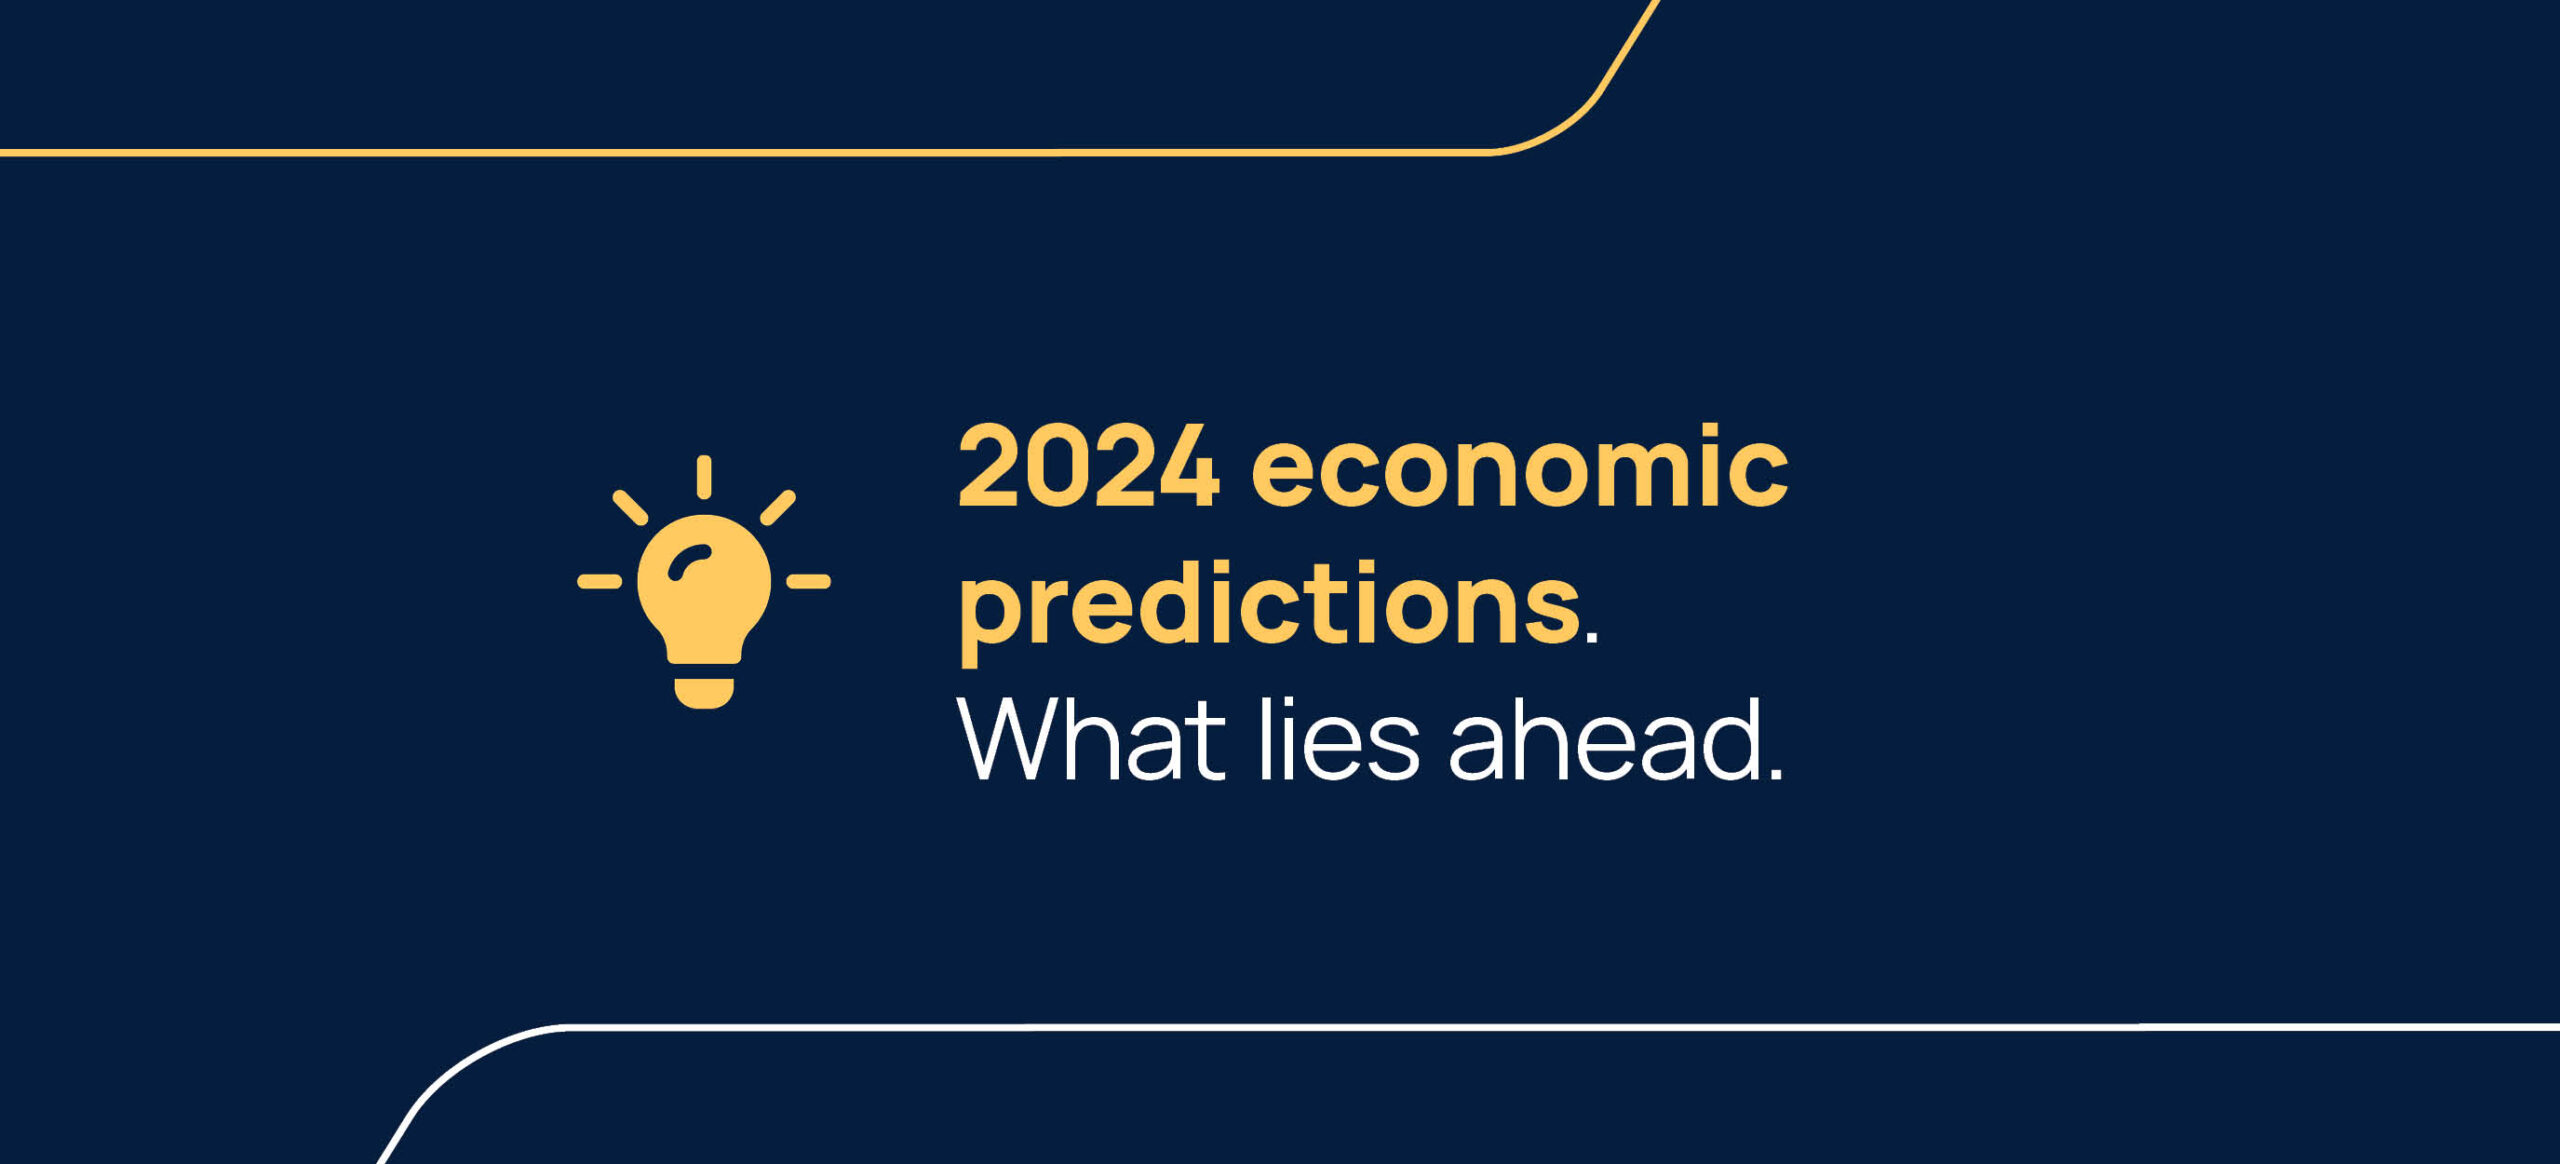 2024 economic predictions. What lies ahead.